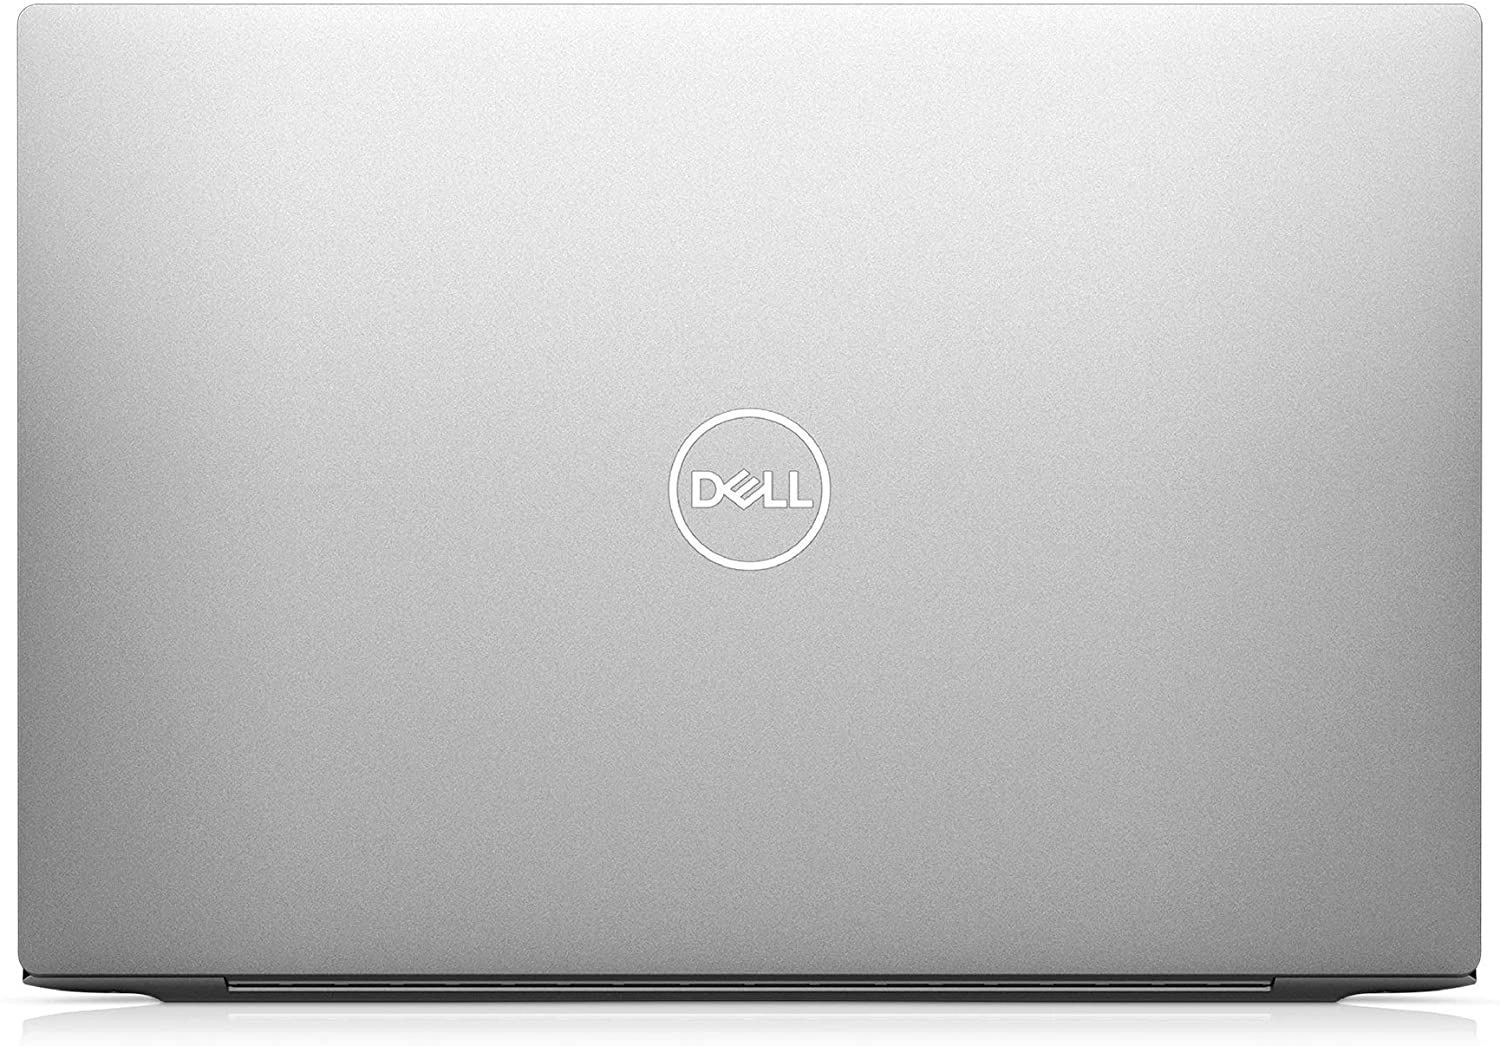 Dell XPS9300-7909SLV-PUS laptop image